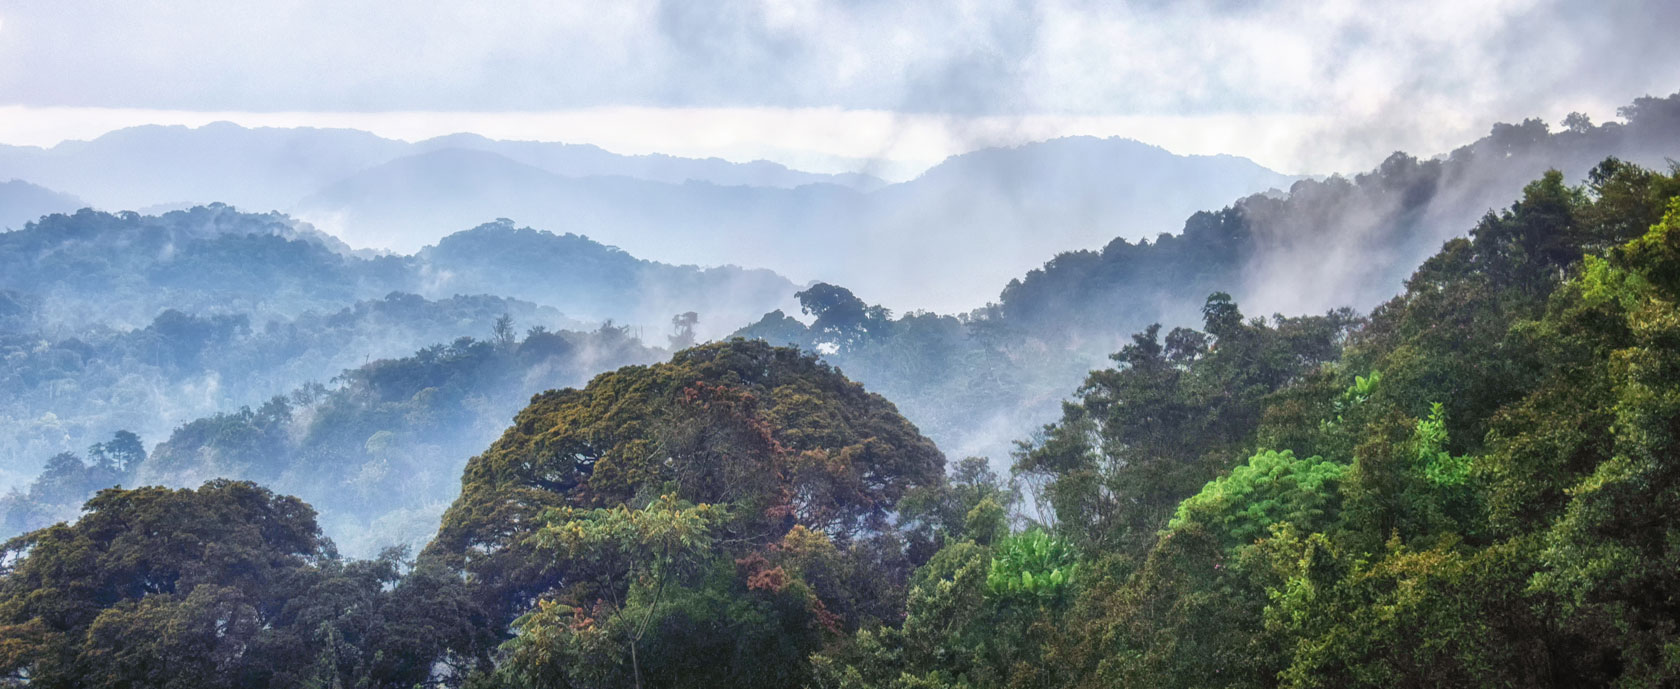 Tropical rainforest of Nyungwe National Park,Rwanda